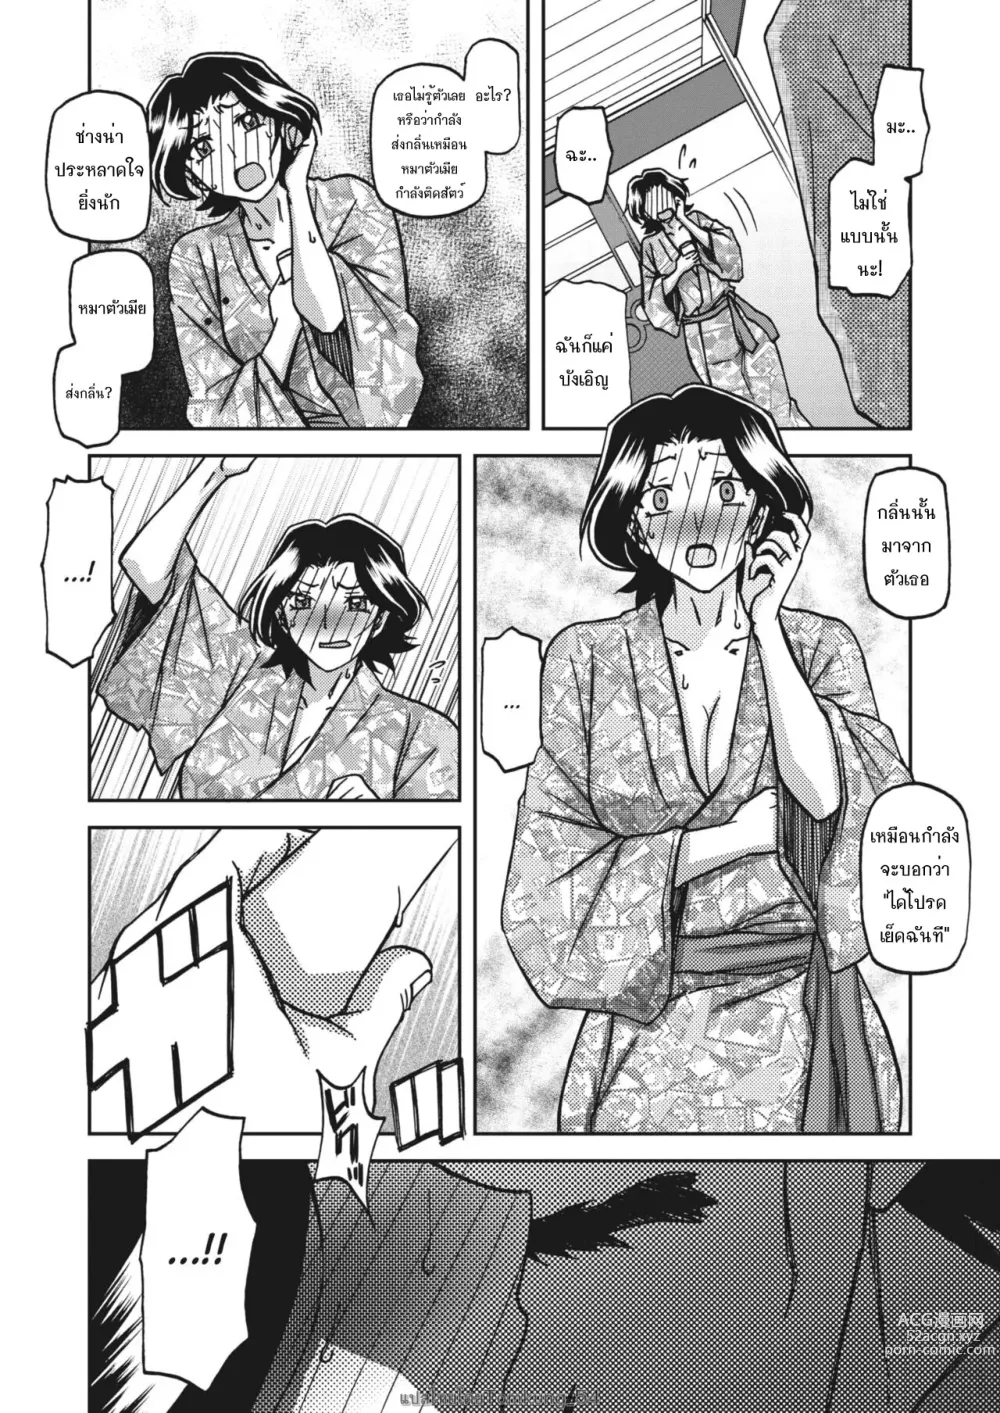 Page 12 of manga Ichiya no Yume - One Night Dream